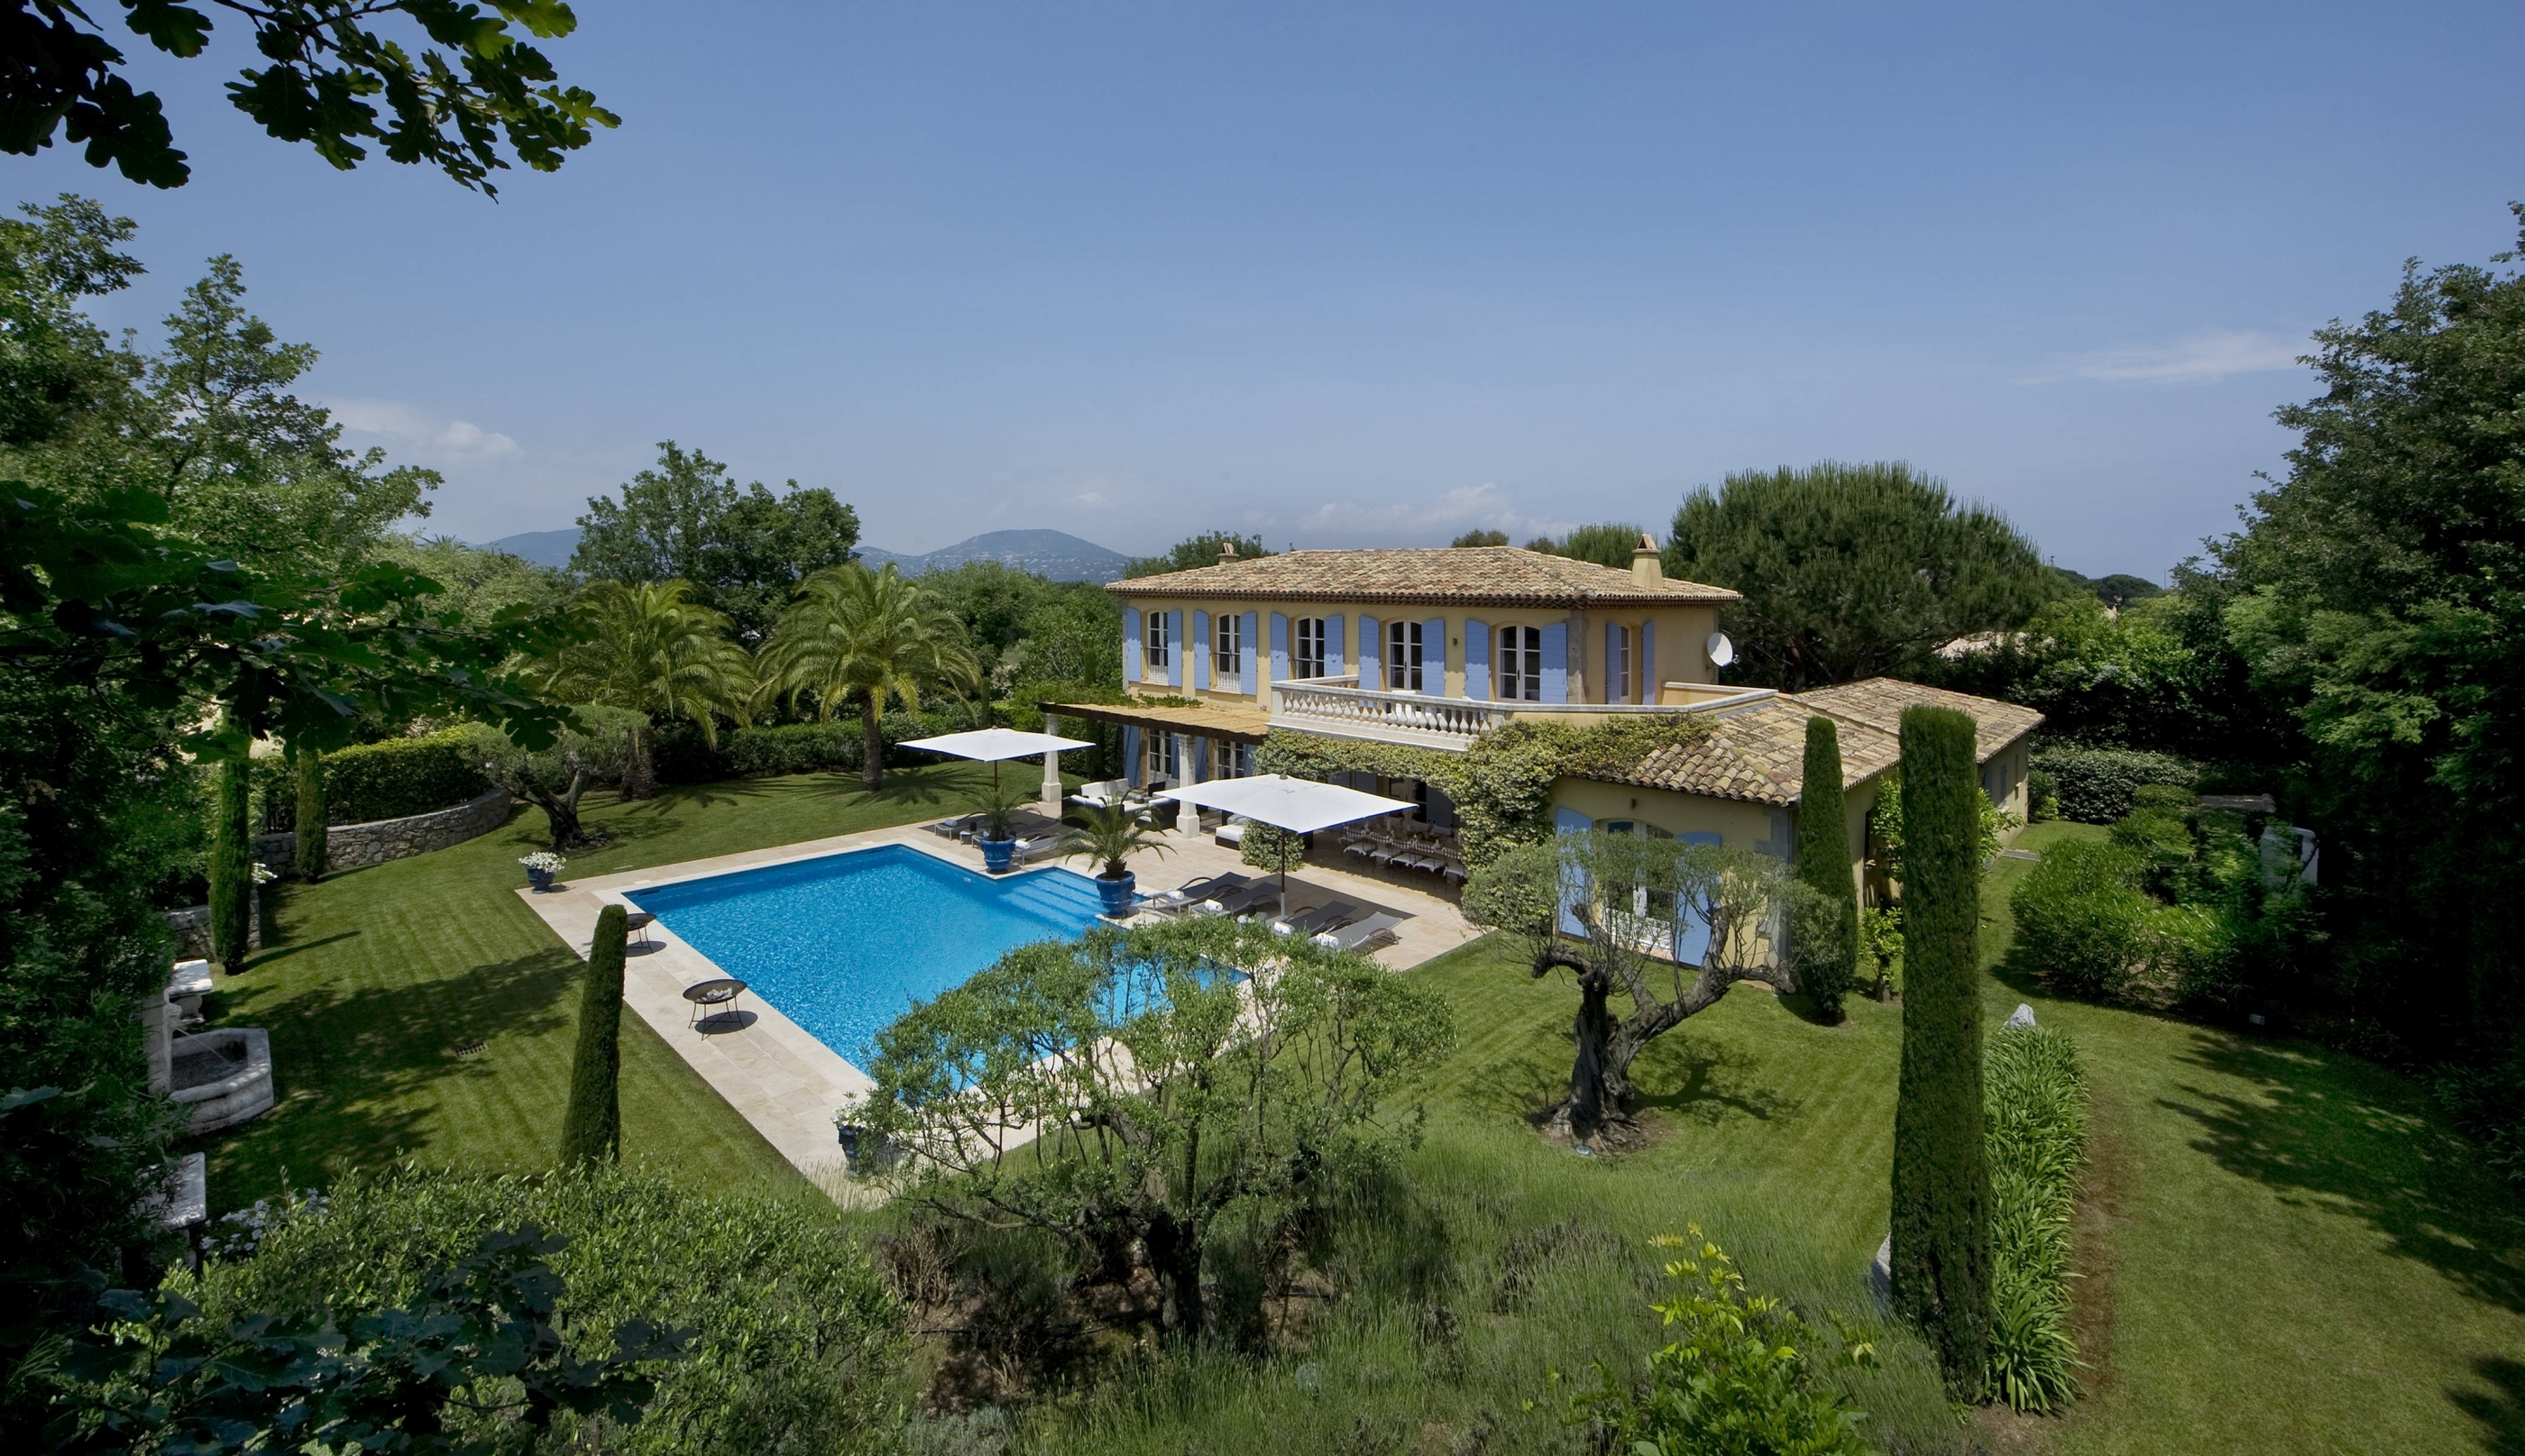 Exteriors and swimming pool of Villa des Tourterelles, Cote dAzur